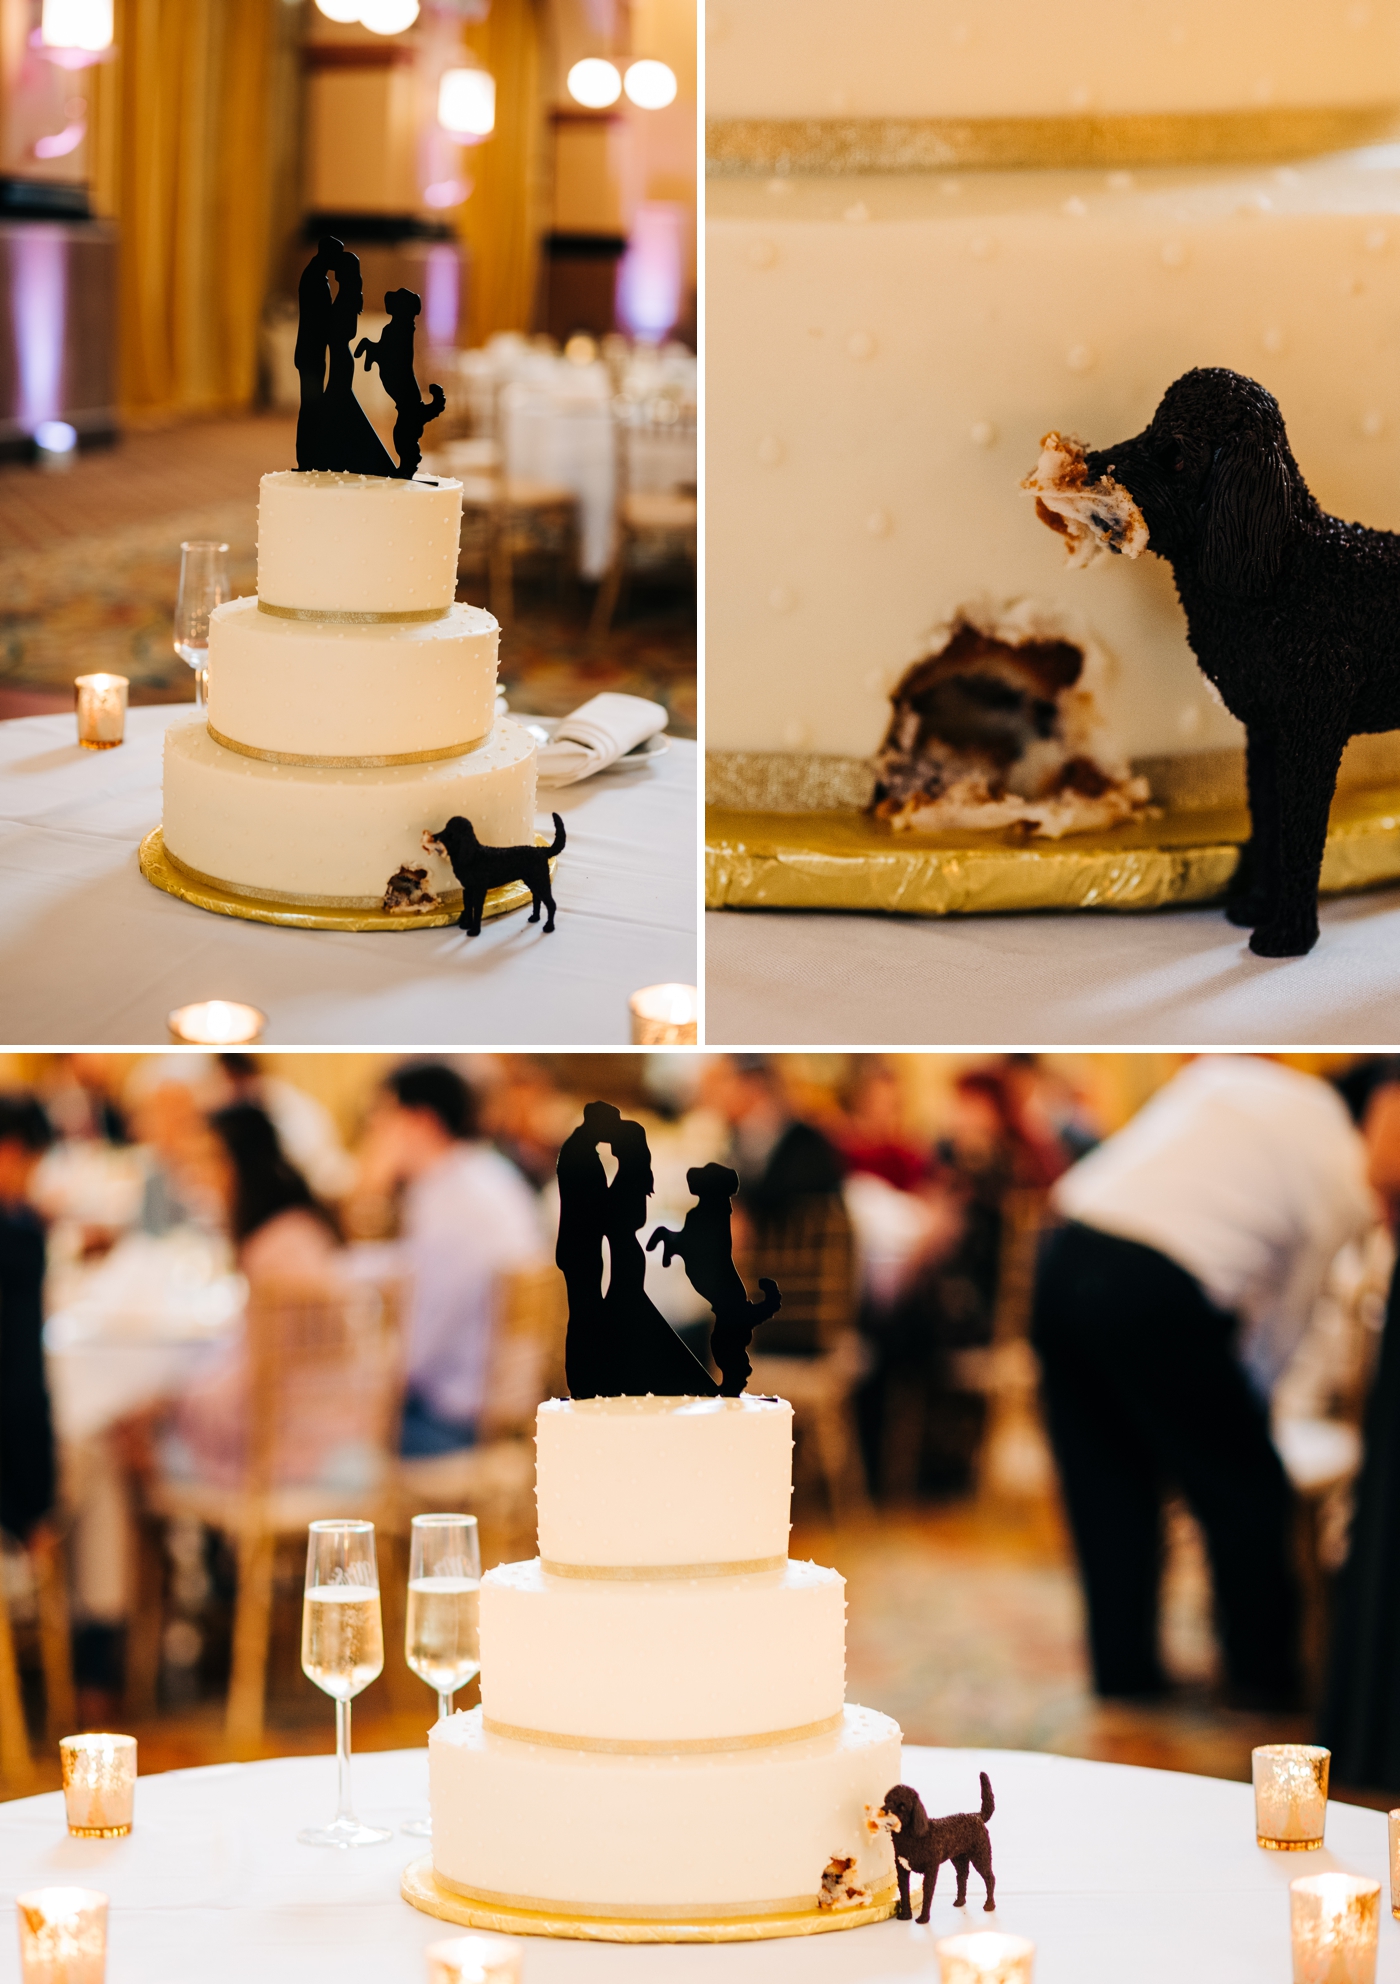 Custom wedding cake with dog themed details